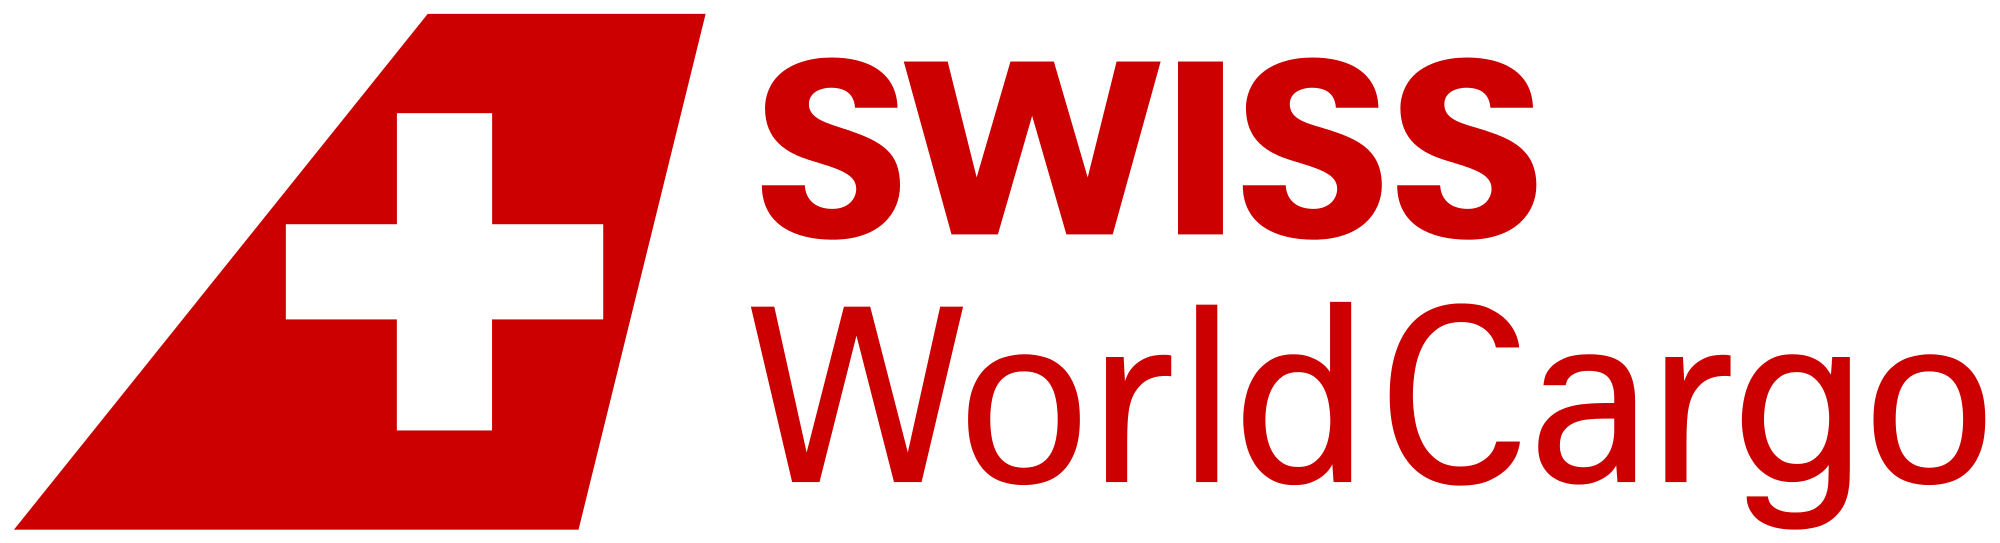 Swiss Air Logo - Swiss WorldCargo Logo.svg